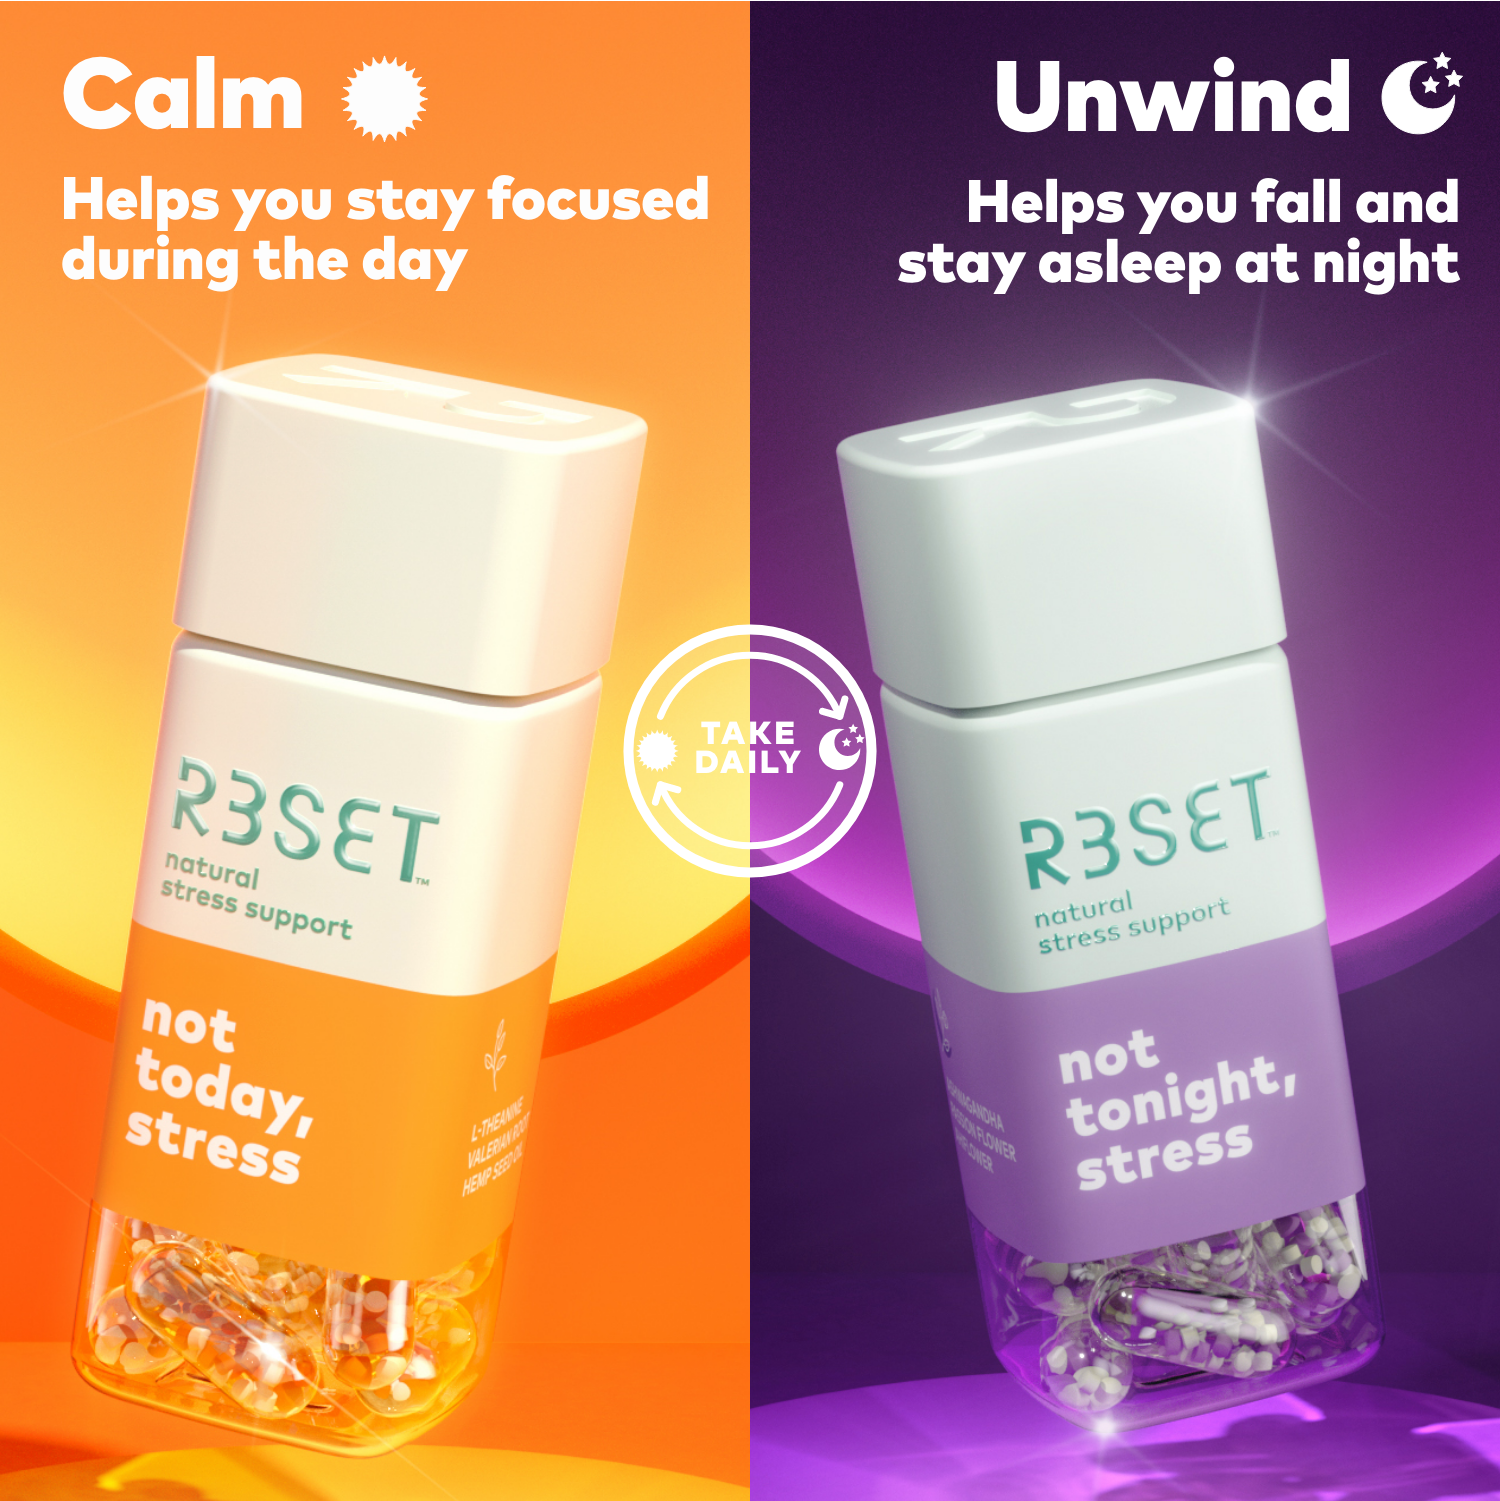 R3SET Supplement Benefits of Calm and Unwind